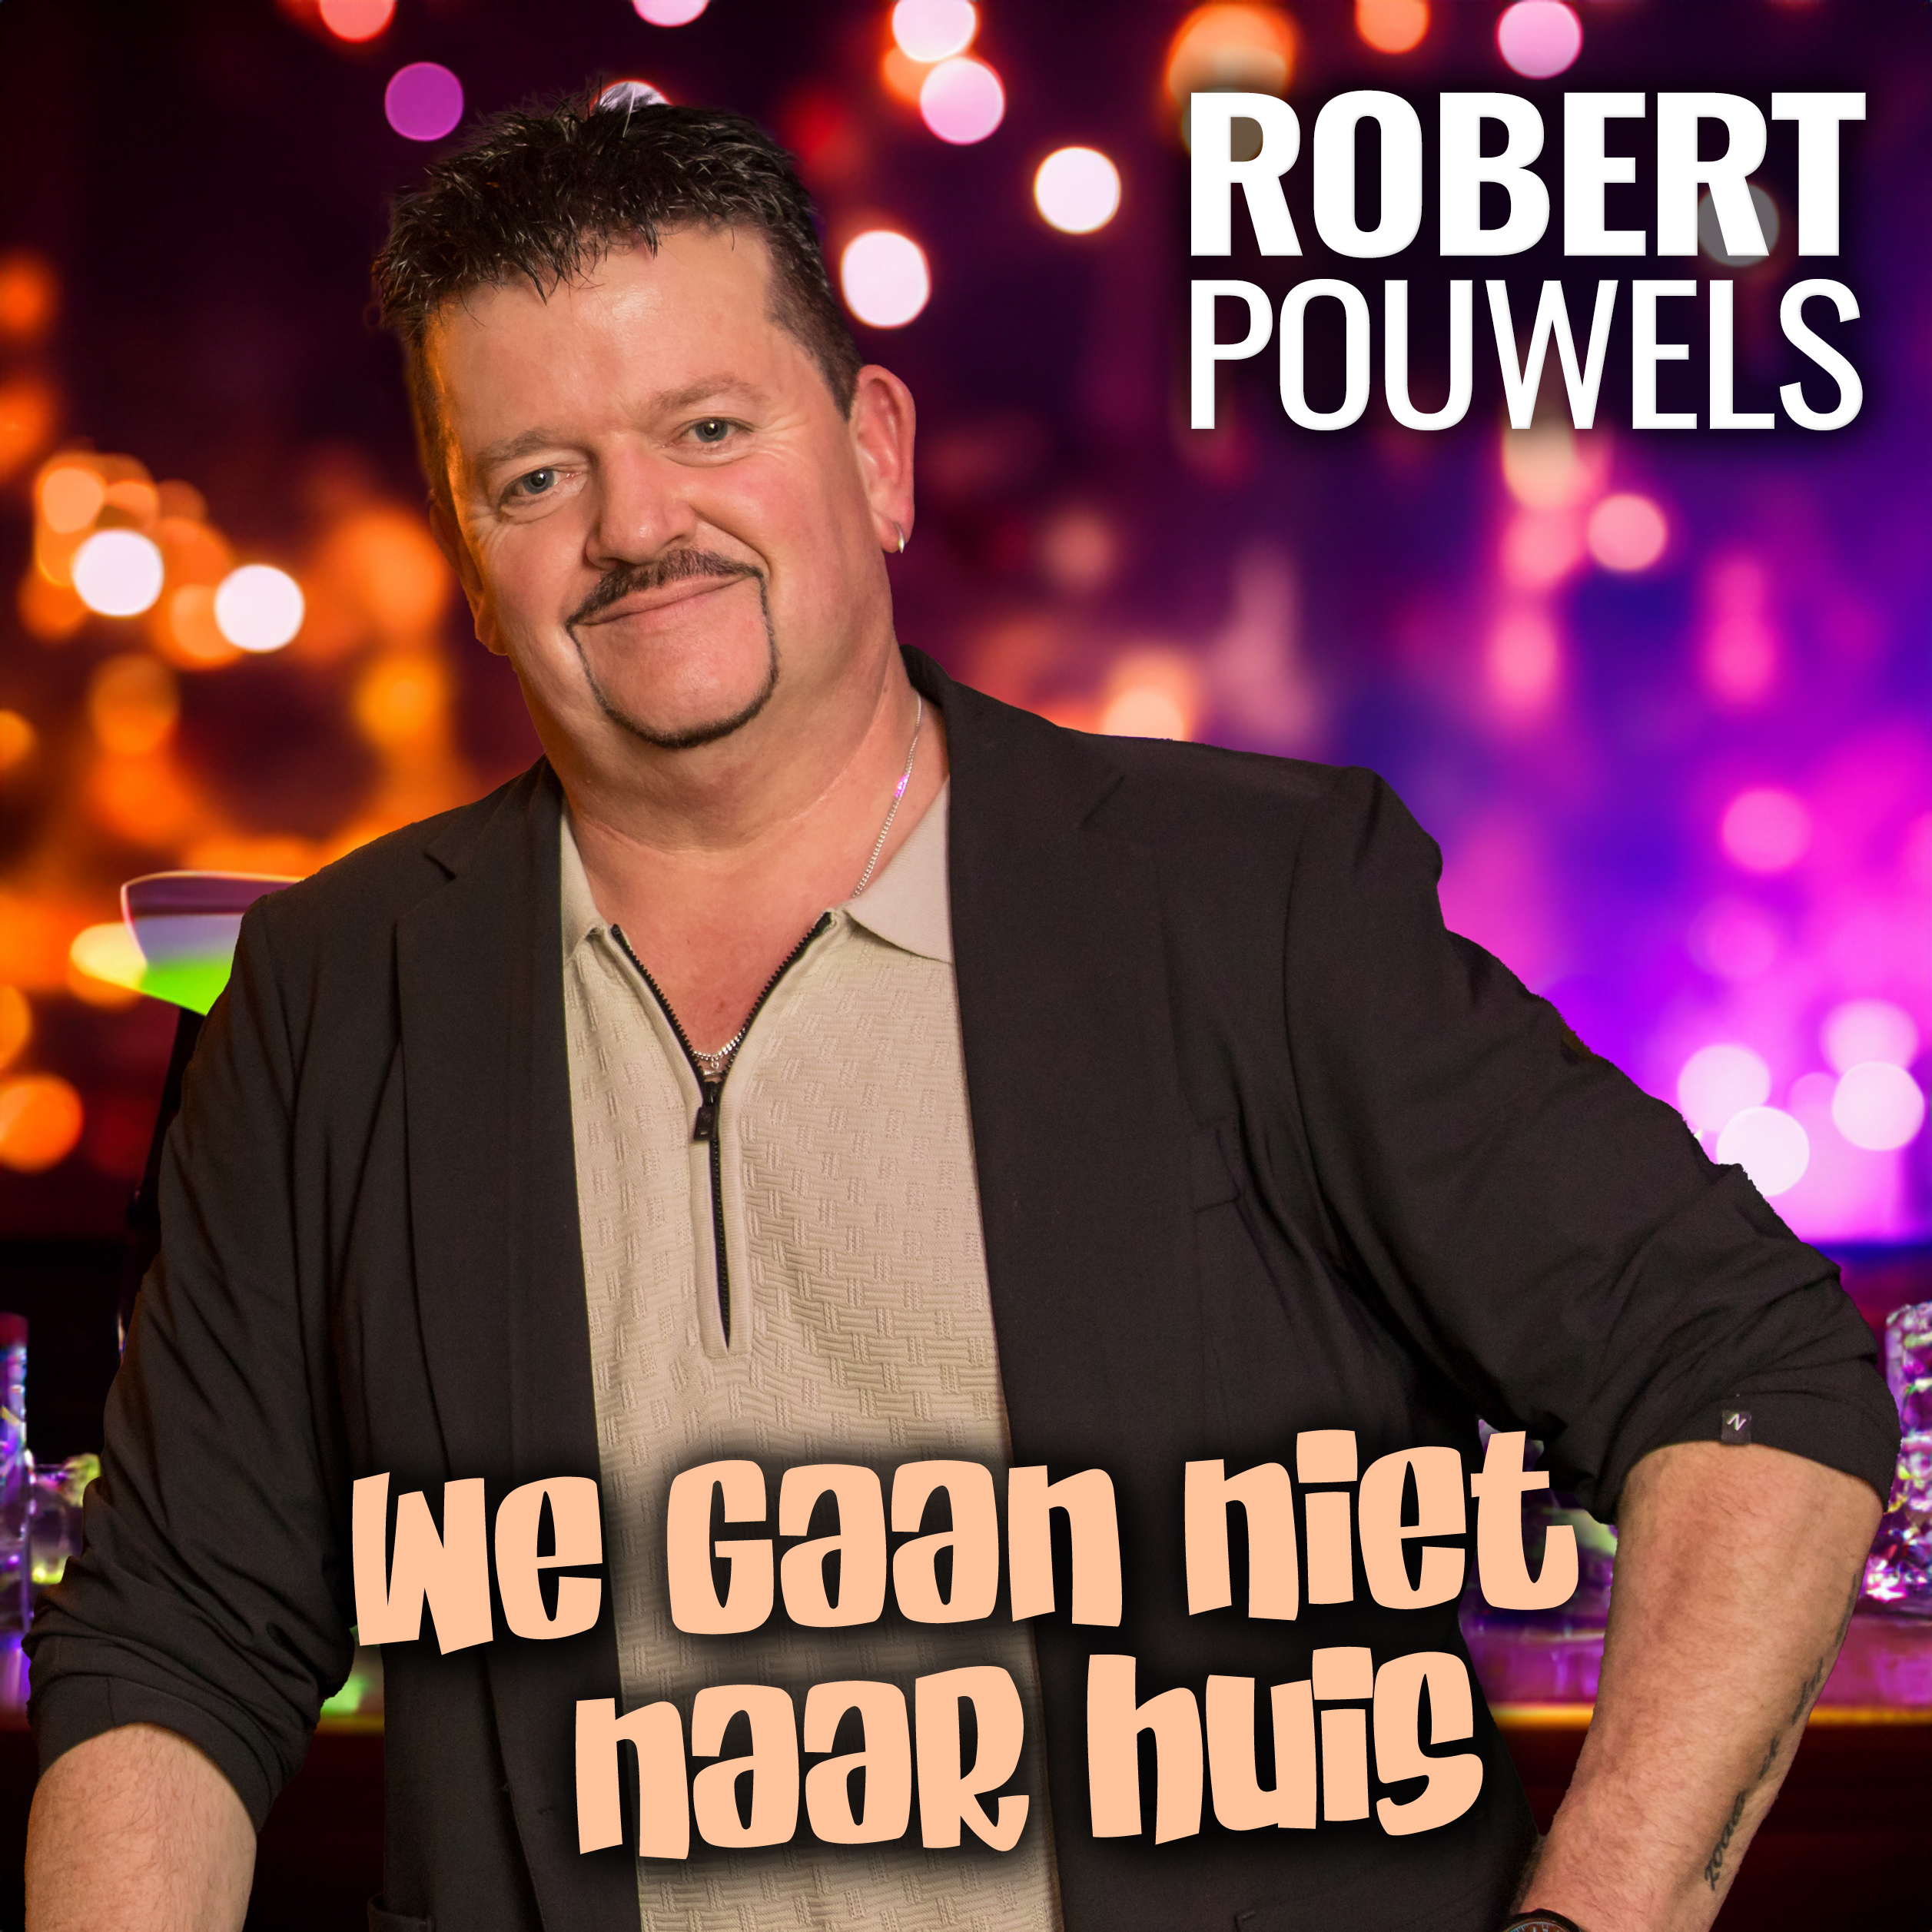 Robert Pouwels